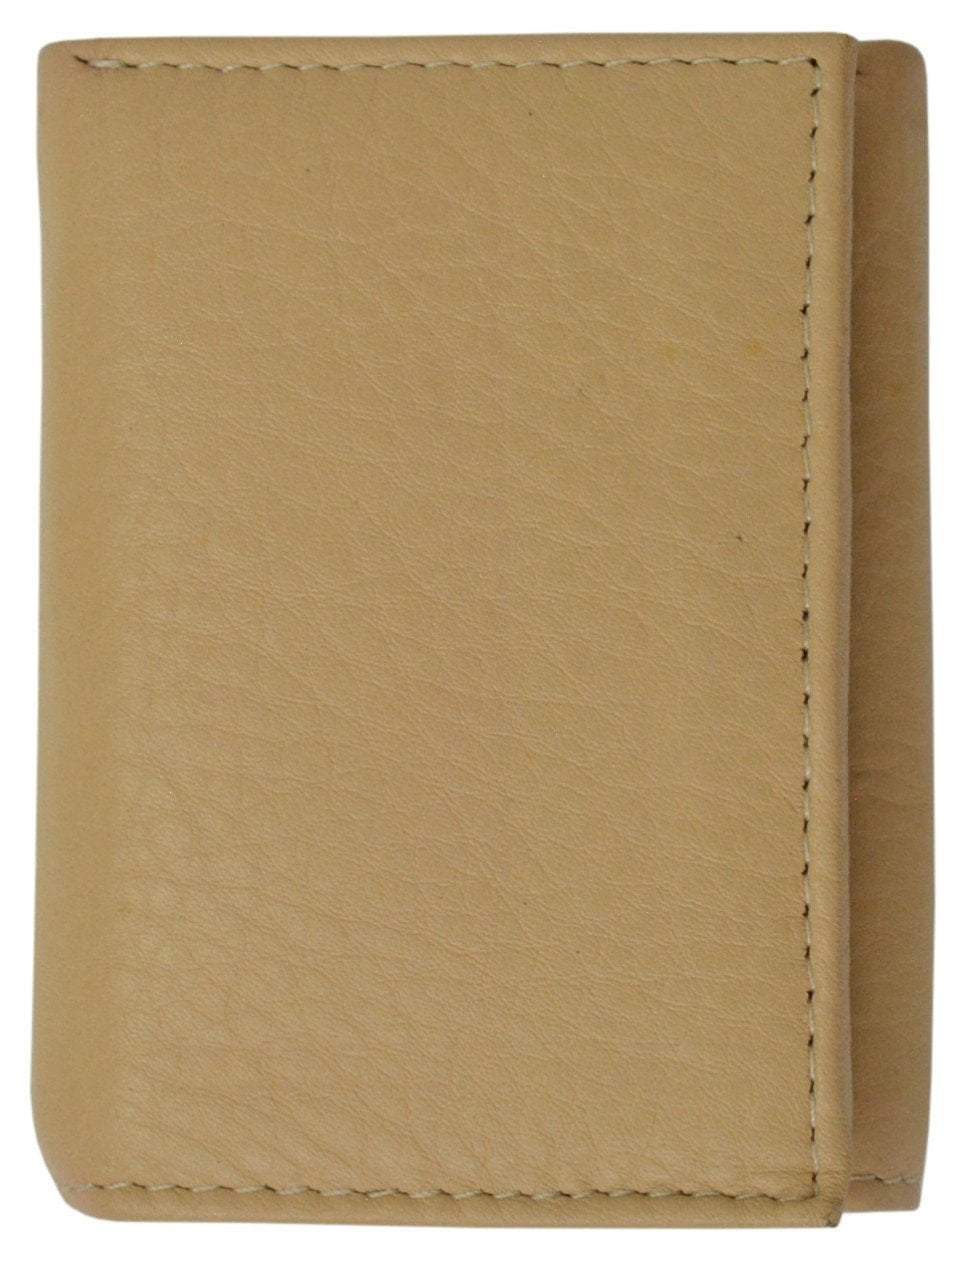 100% Leather Tri-fold Mens Wallet Black #961107